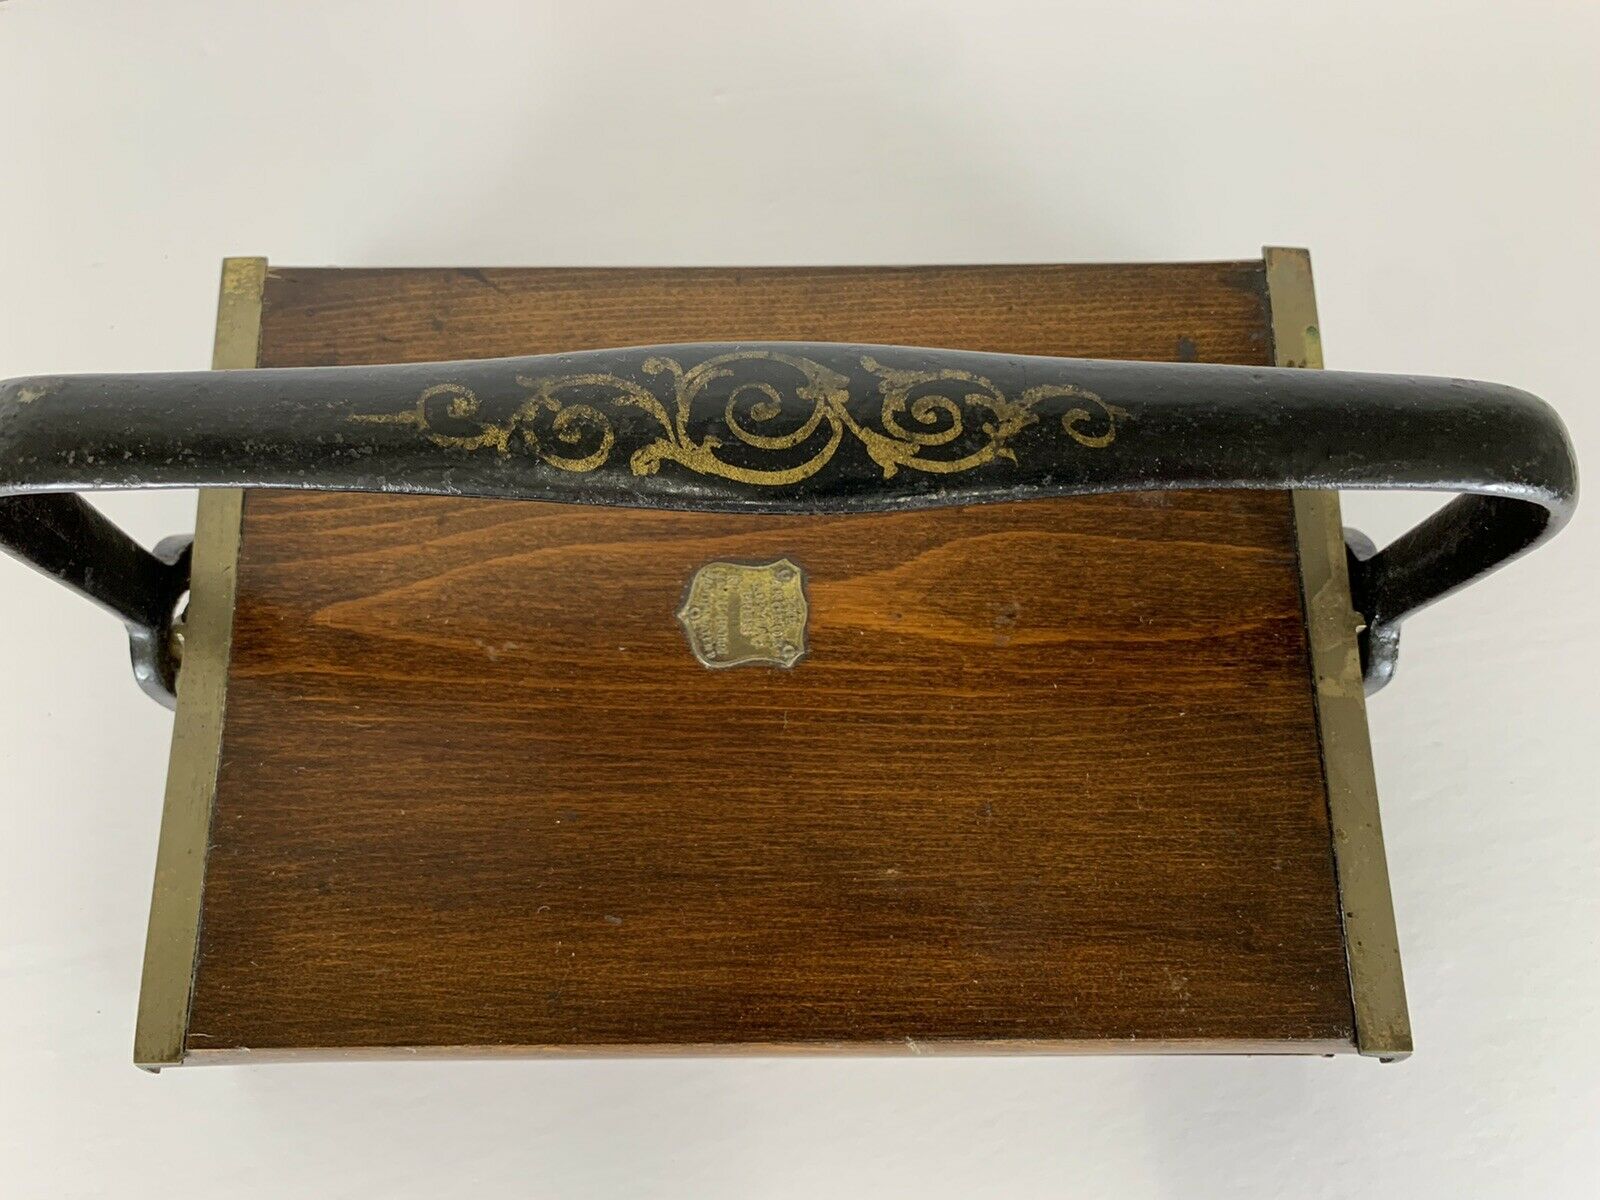 Rare Antique 1891 Copying Press "the Anchor" James Watt Co London Hastie Patent